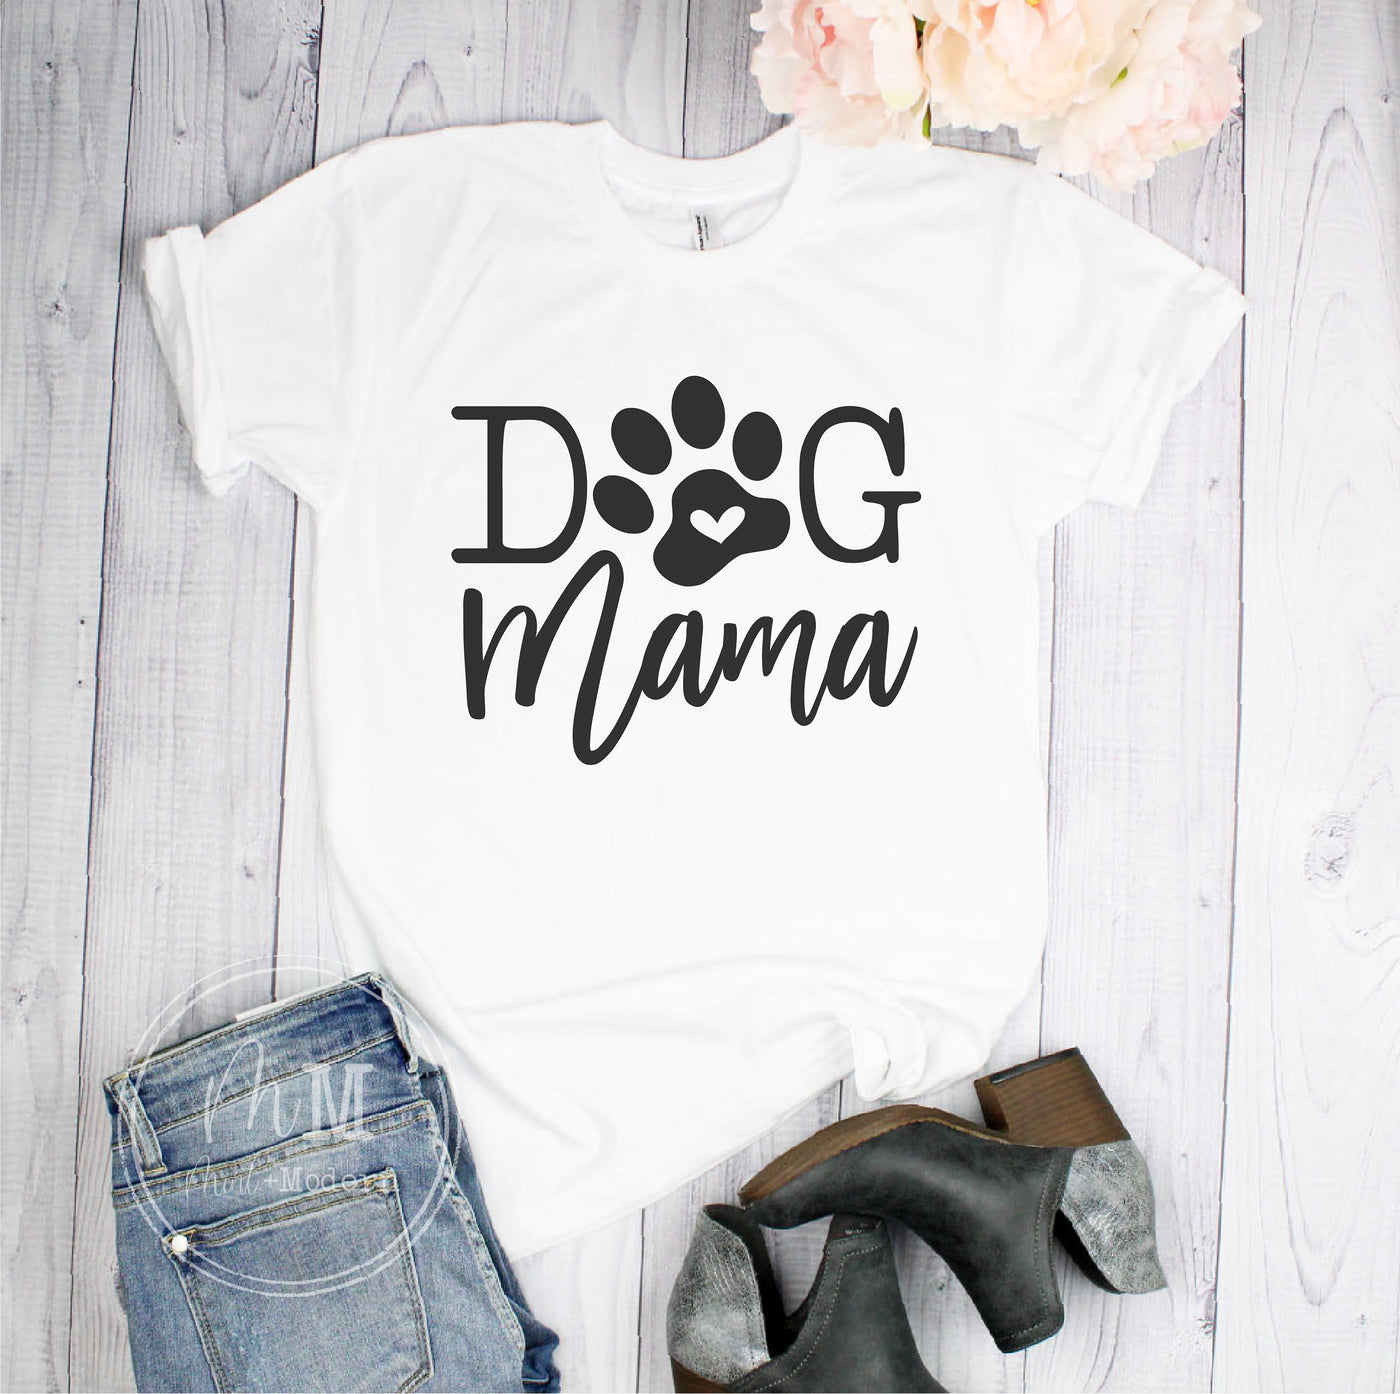 Dog Mama Tee - Dog Mama Shirt - Animal Lover Shirt - Fur Mama